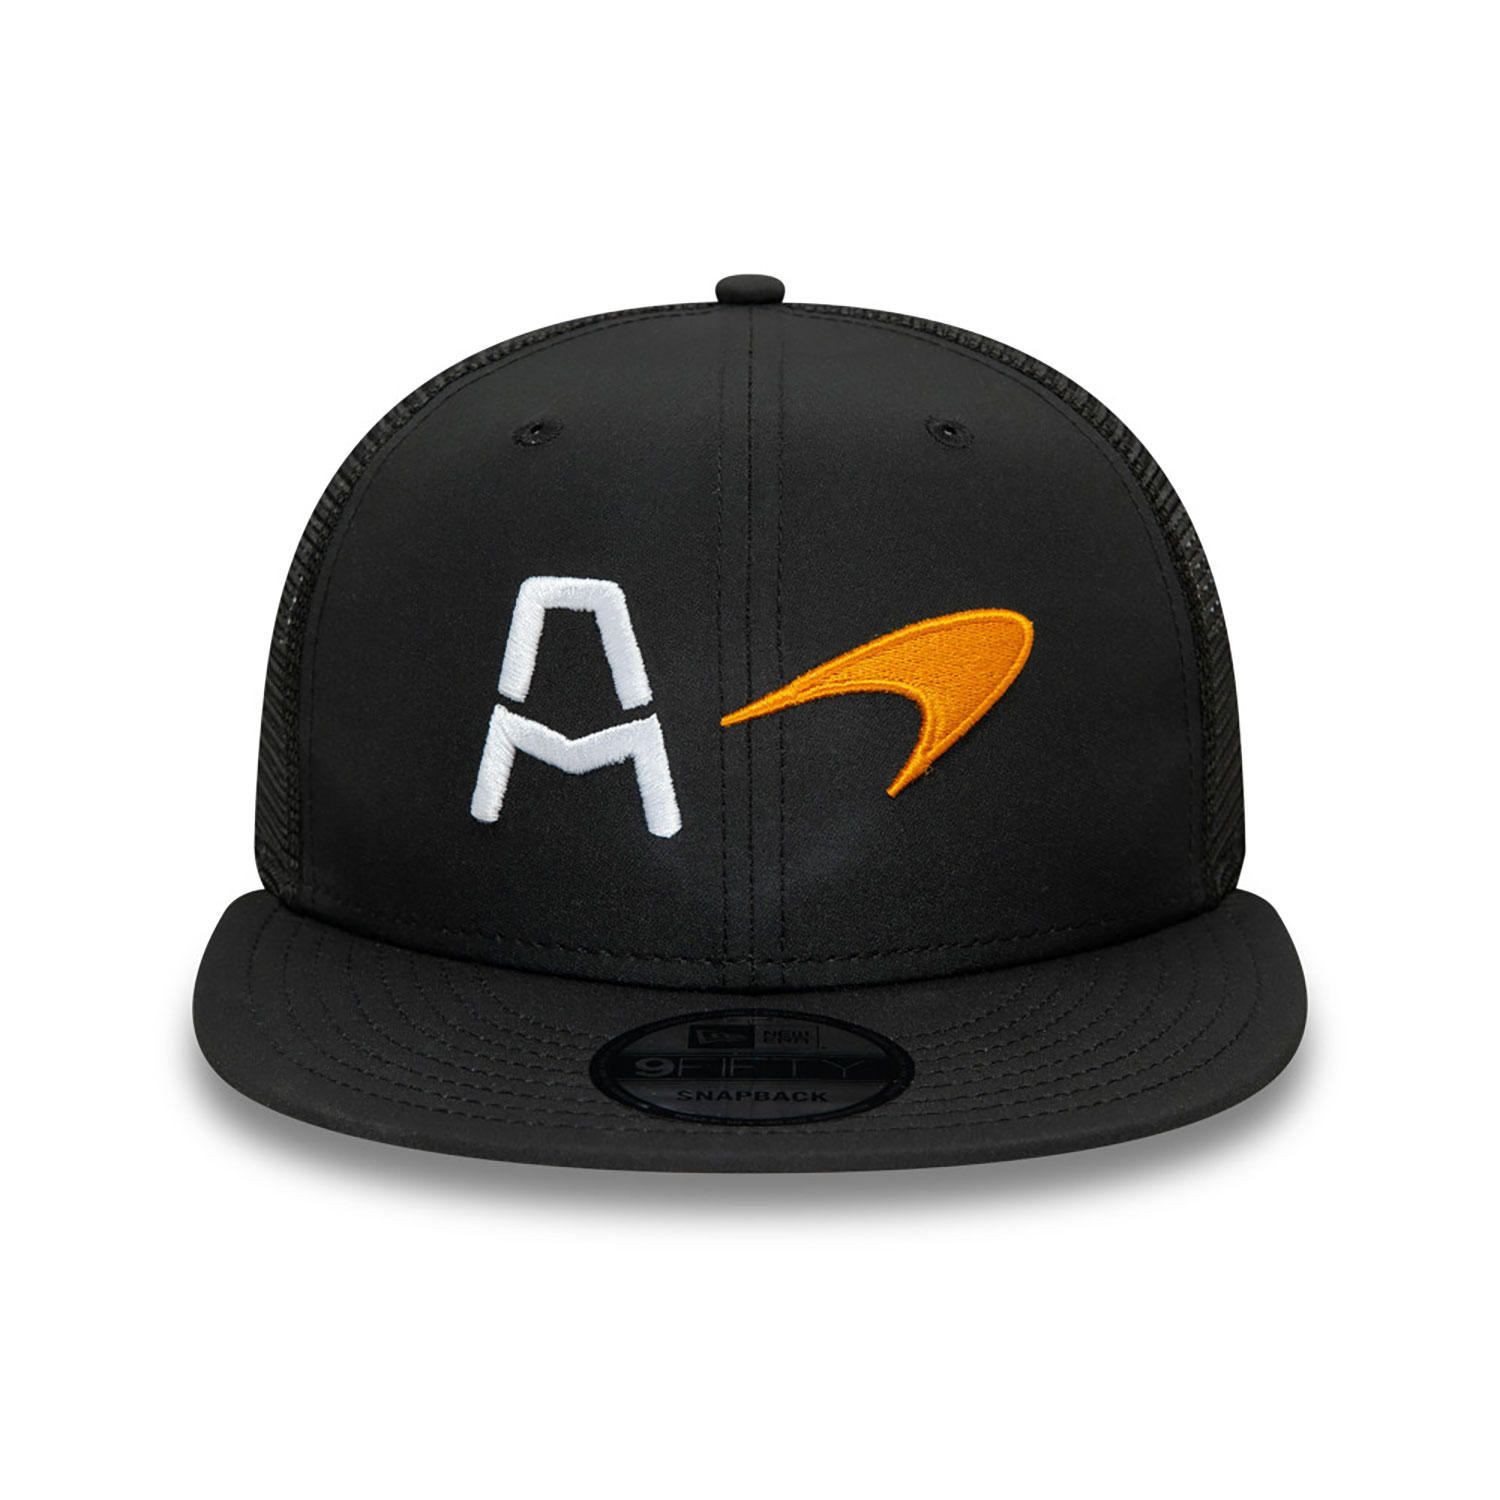 McLaren Racing Arrow Indycar Essential Black 9FIFTY Snapback Cap